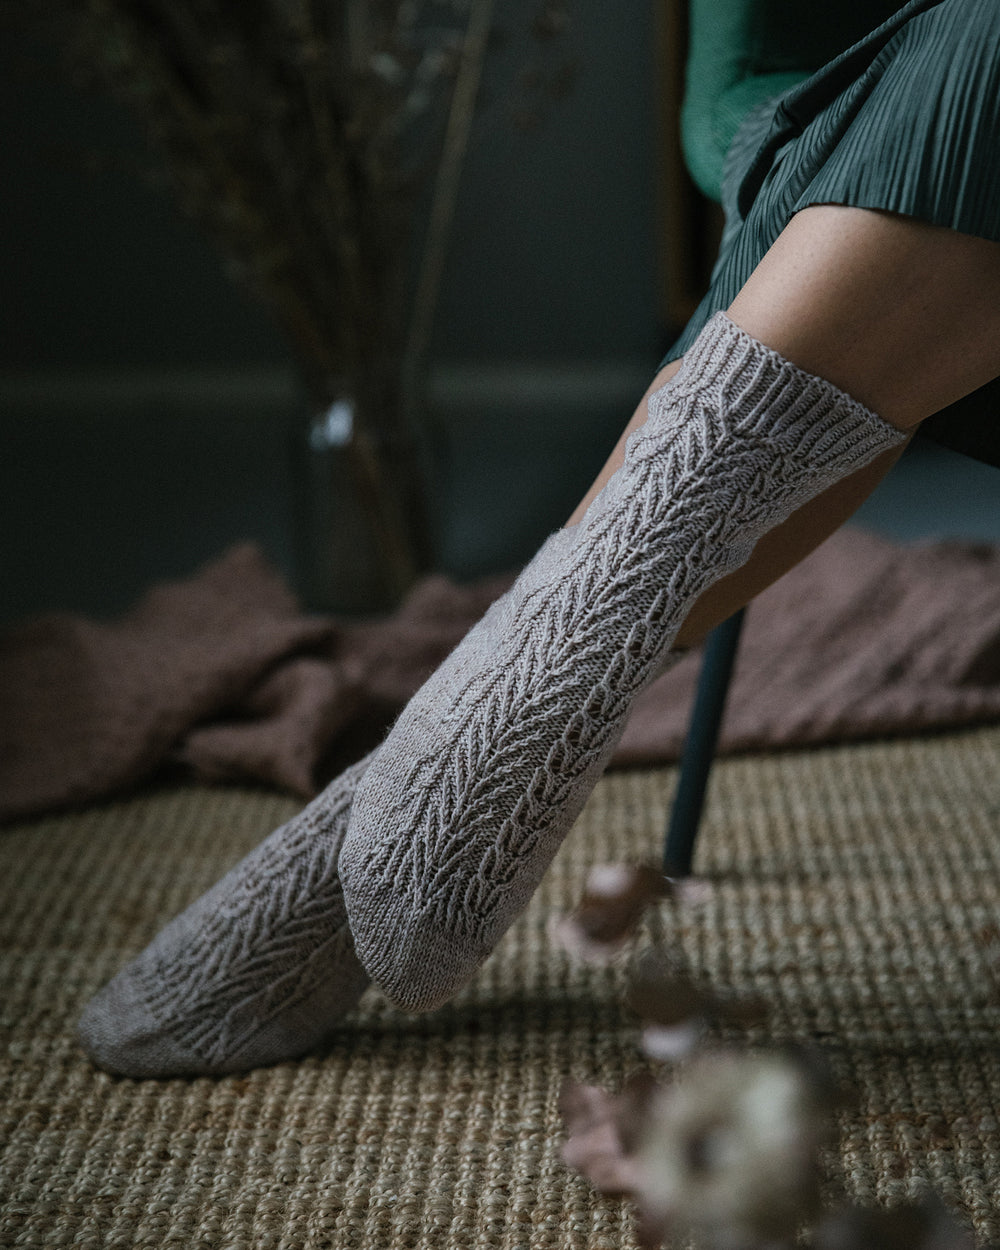 52 Weeks of Socks – Knotty Knit